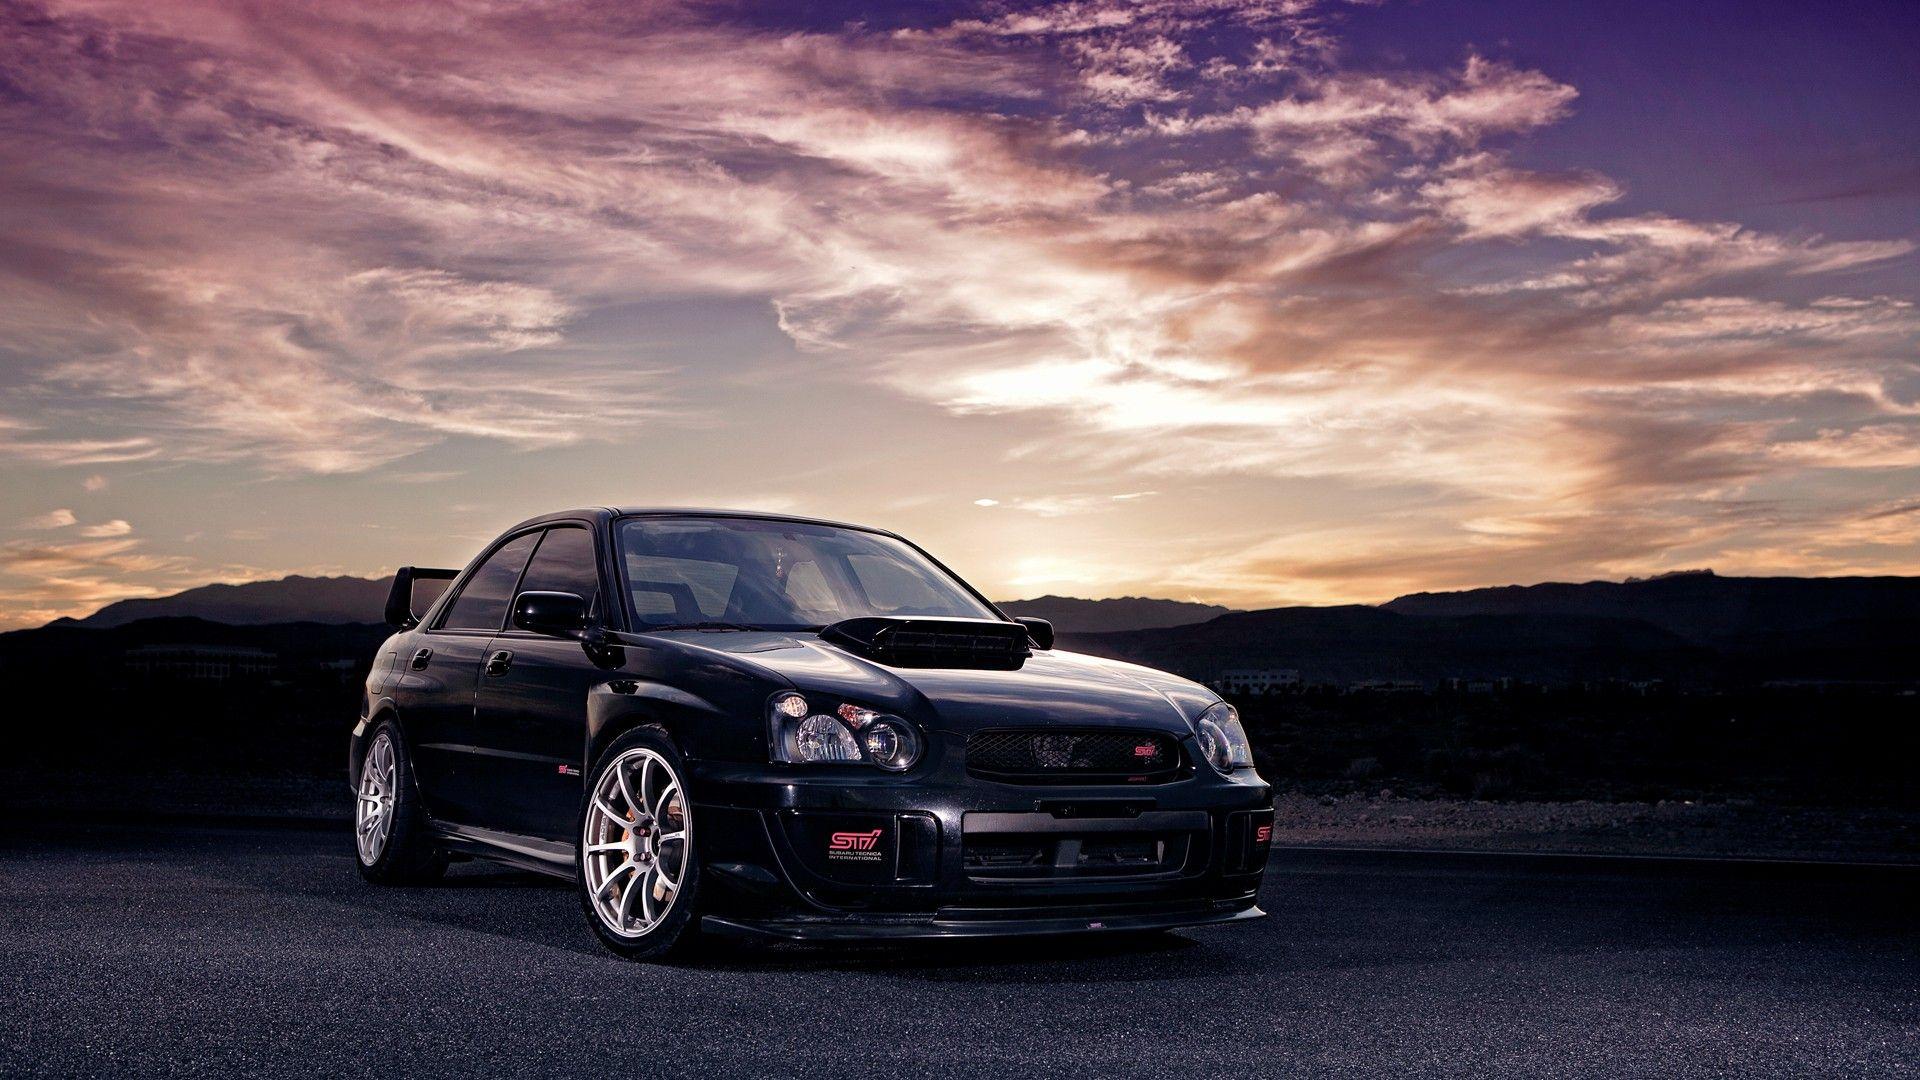 Subaru Sti Wallpapers Top Free Subaru Sti Backgrounds Wallpaperaccess